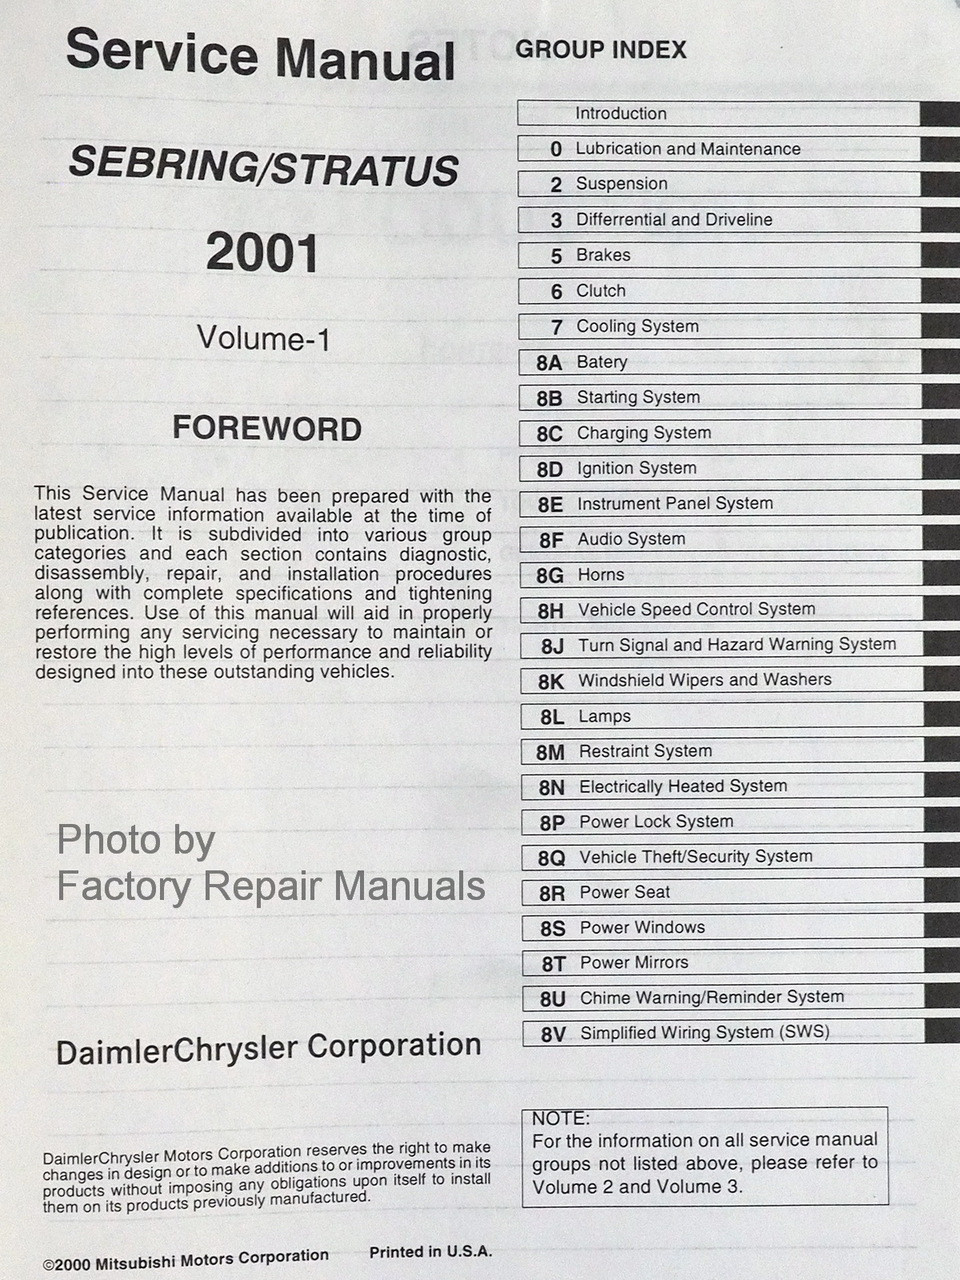 Wiring Diagram For 2004 Chrysler Sebring - Complete Wiring Schemas